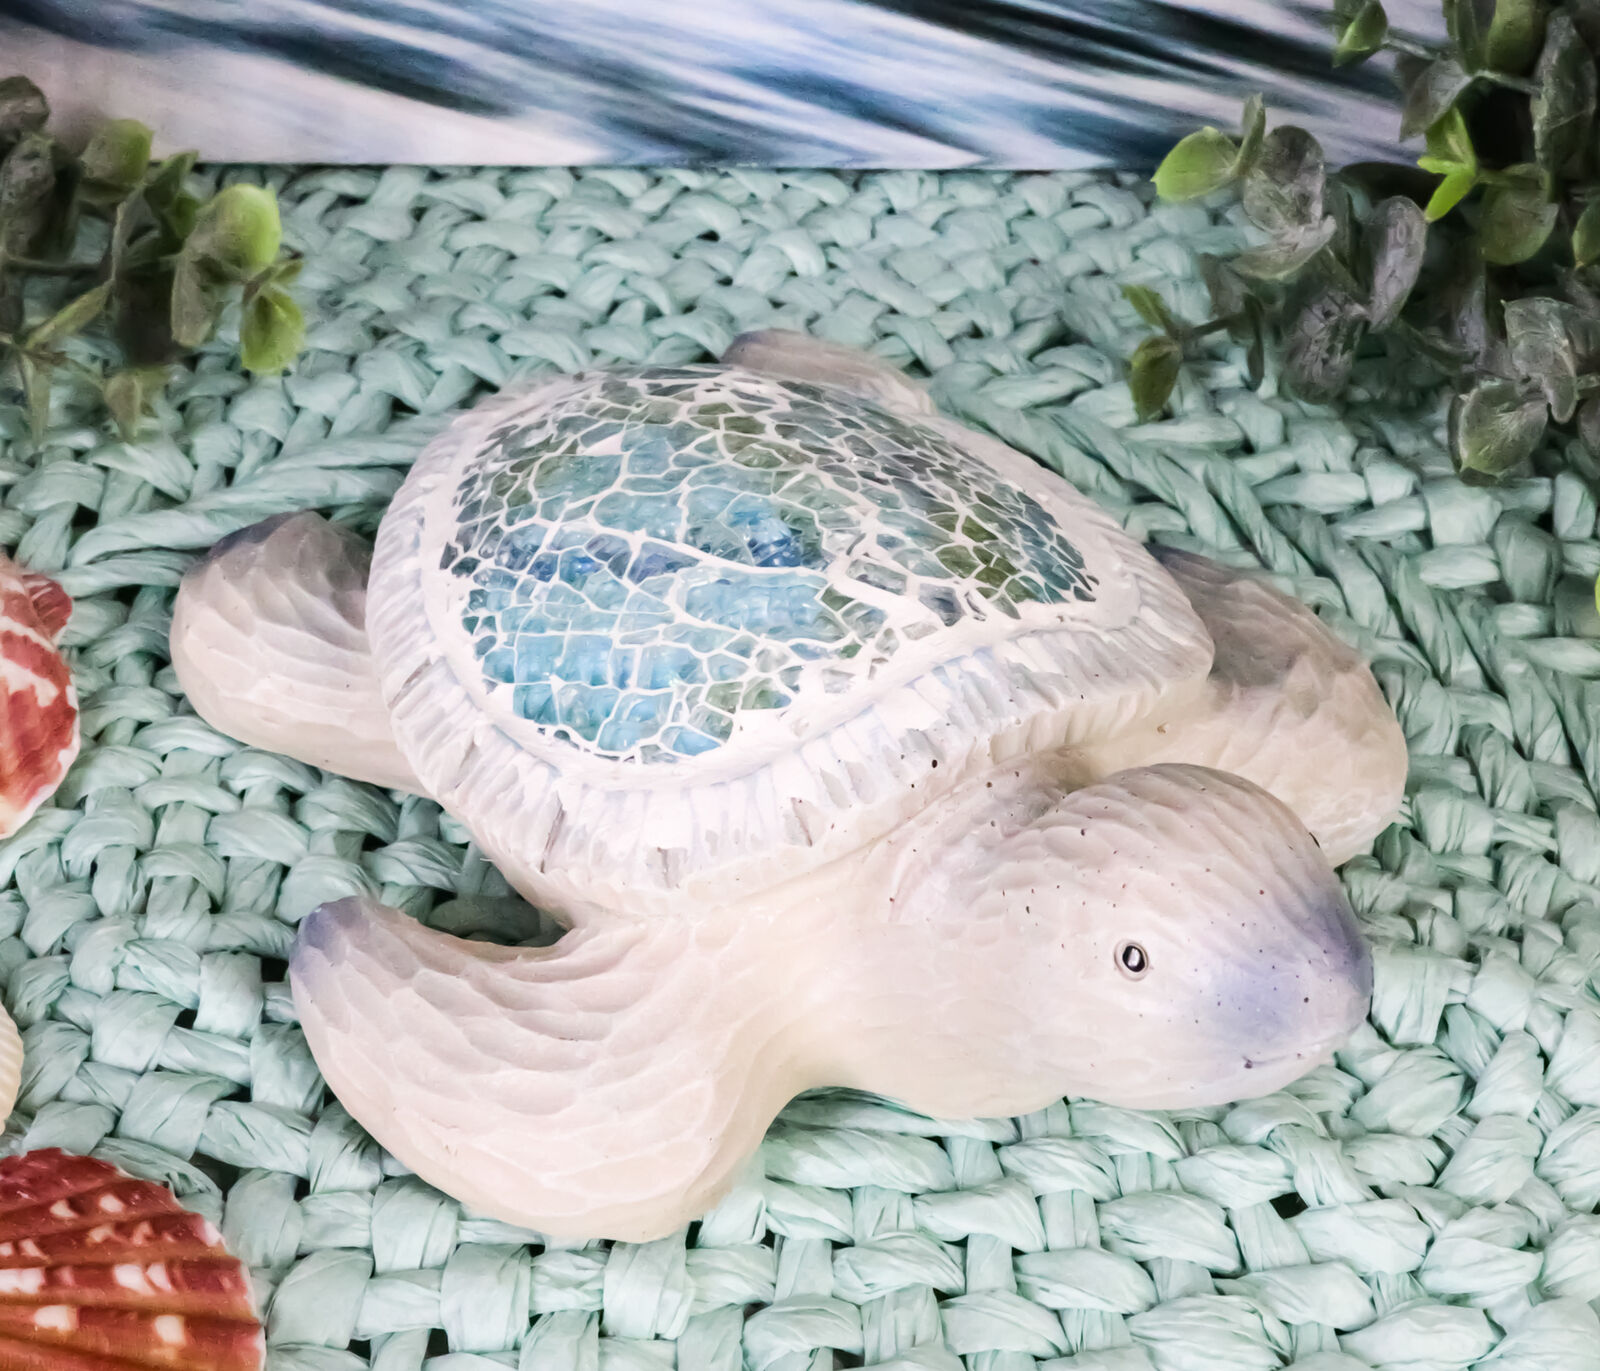 Coastal Ocean Giant Sea Turtle Decorative Figurine With Crushed Glass Shell